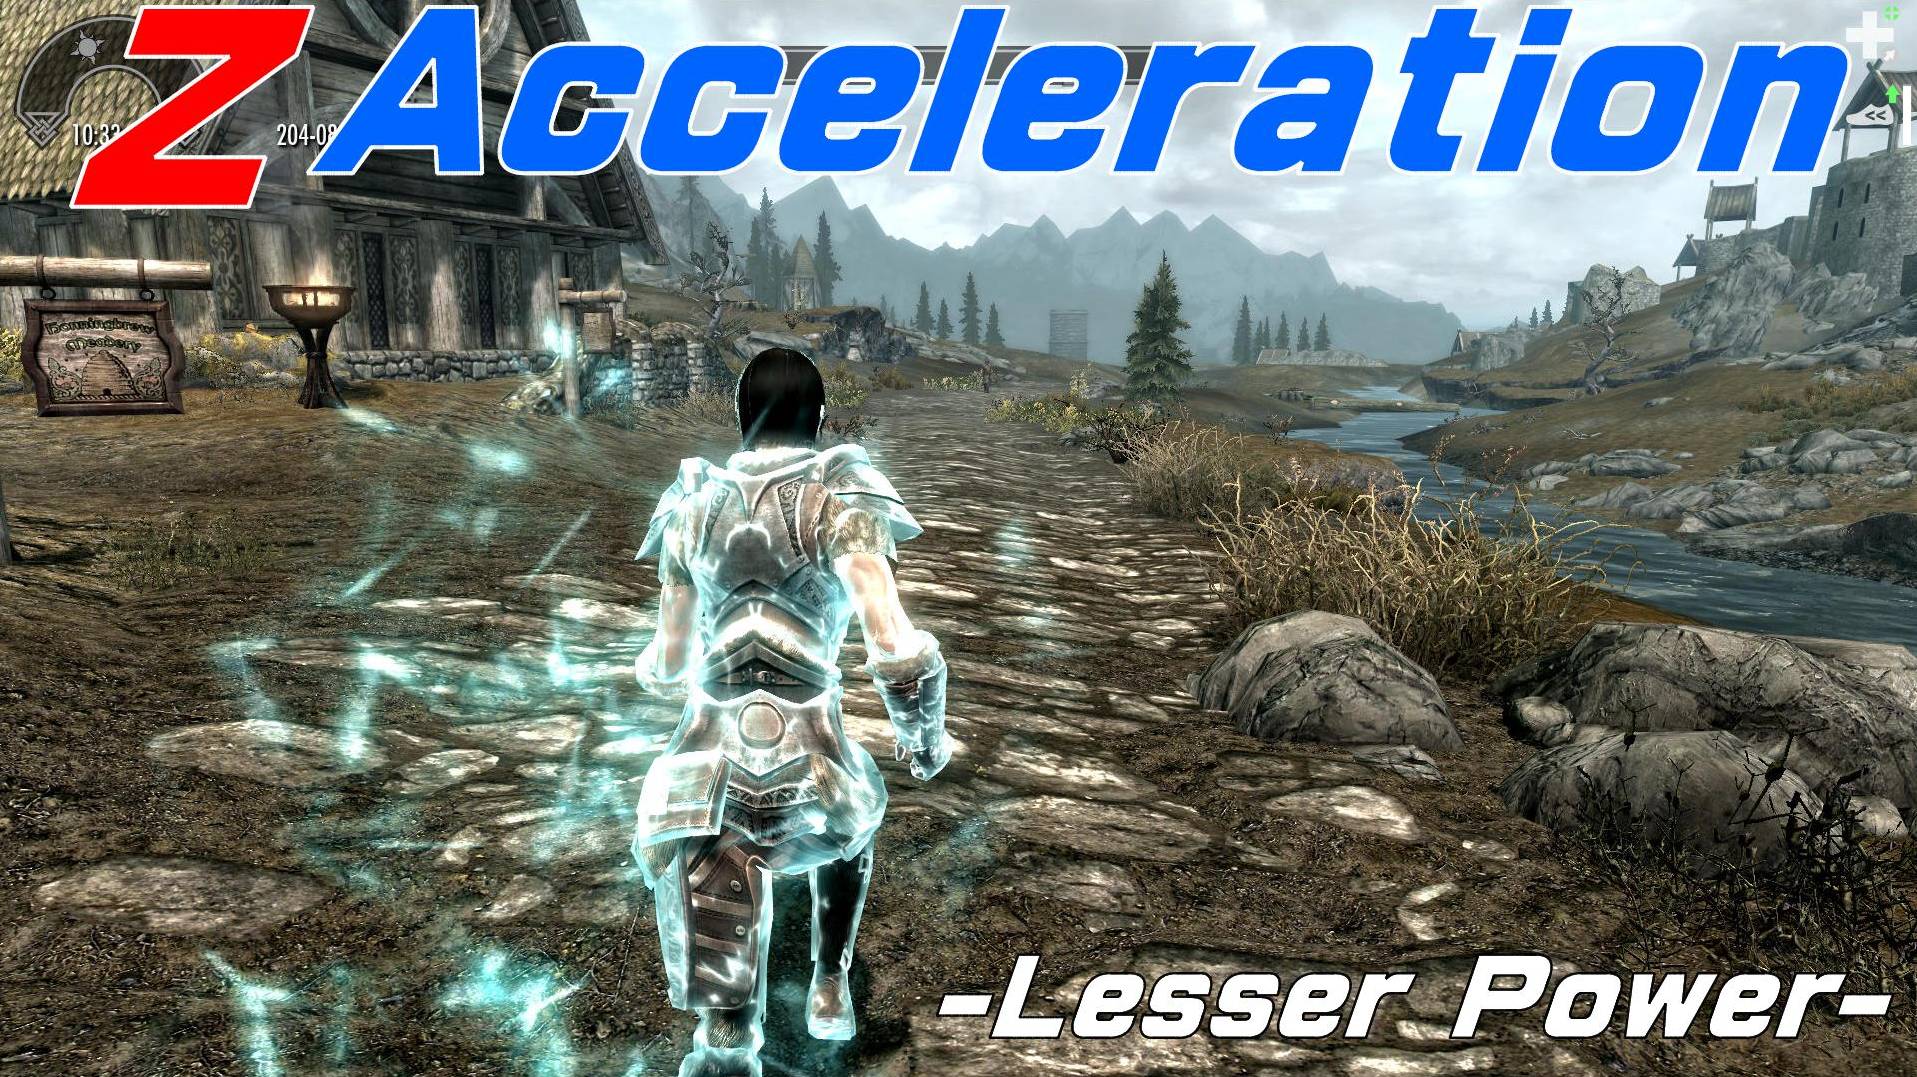 Z Acceleration Lesser Power 魔法 呪文 エンチャント Skyrim Special Edition Mod データベース Mod紹介 まとめサイト